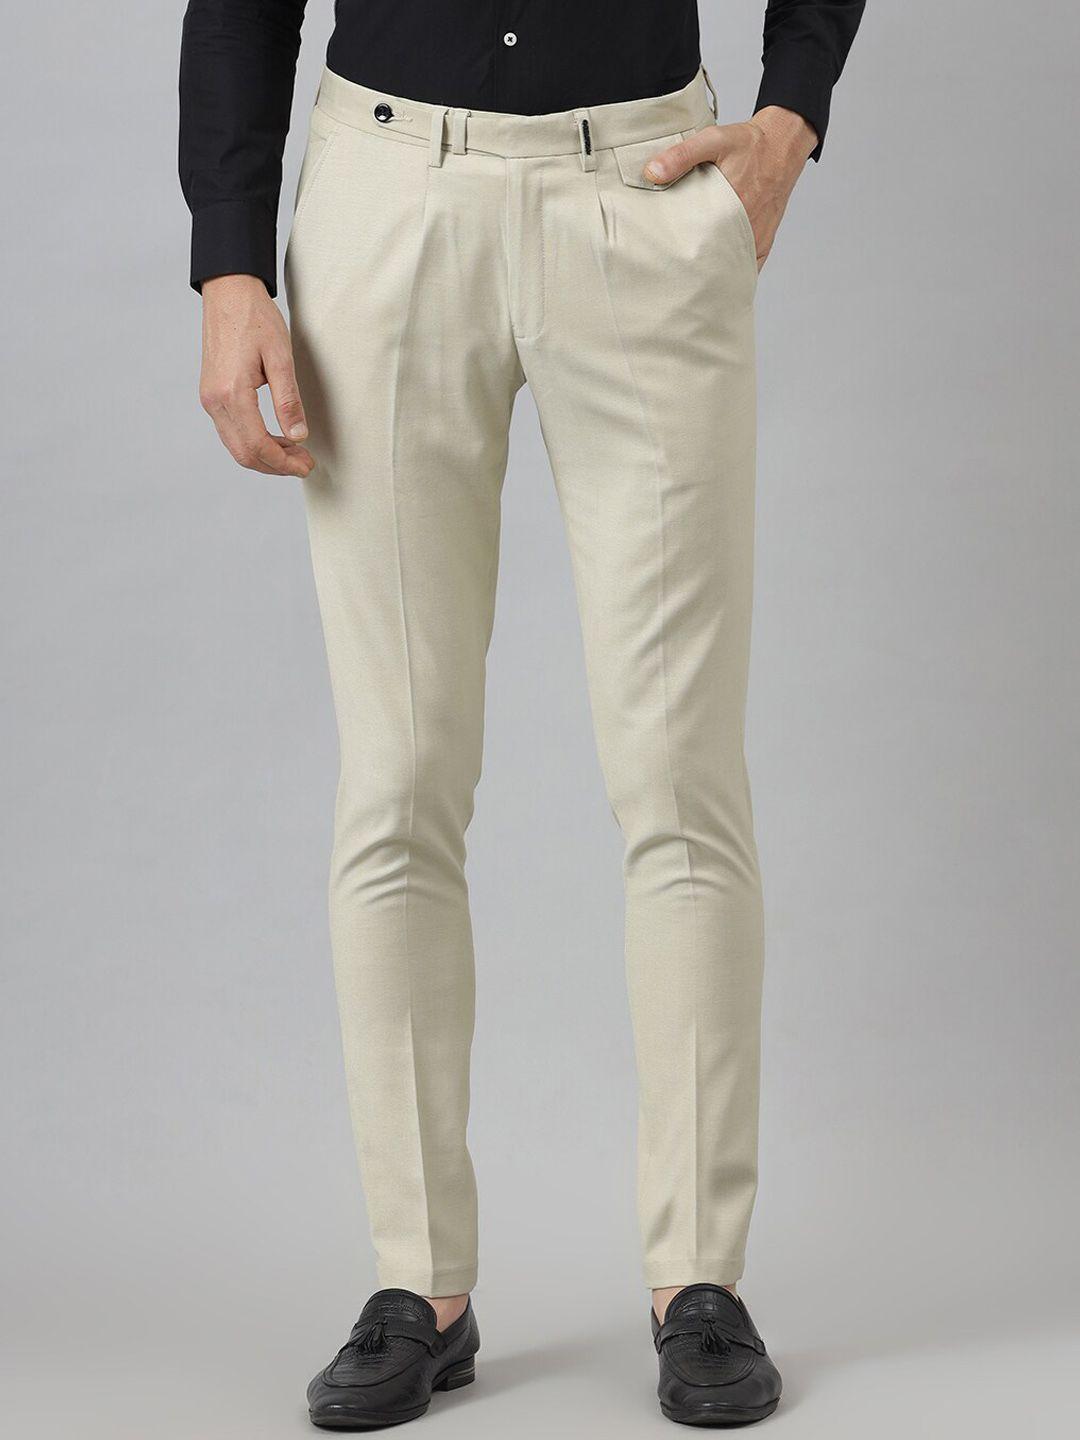 mr-button-men-beige-slim-fit-pleated-trousers